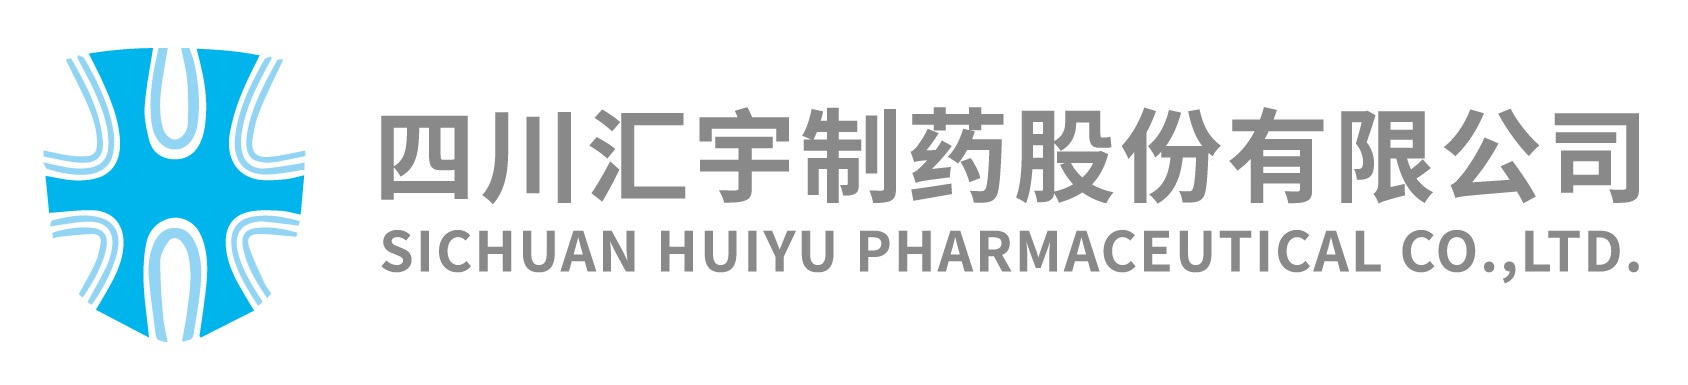 Sichuan Huiyu Pharmaceutical Co.,Ltd.